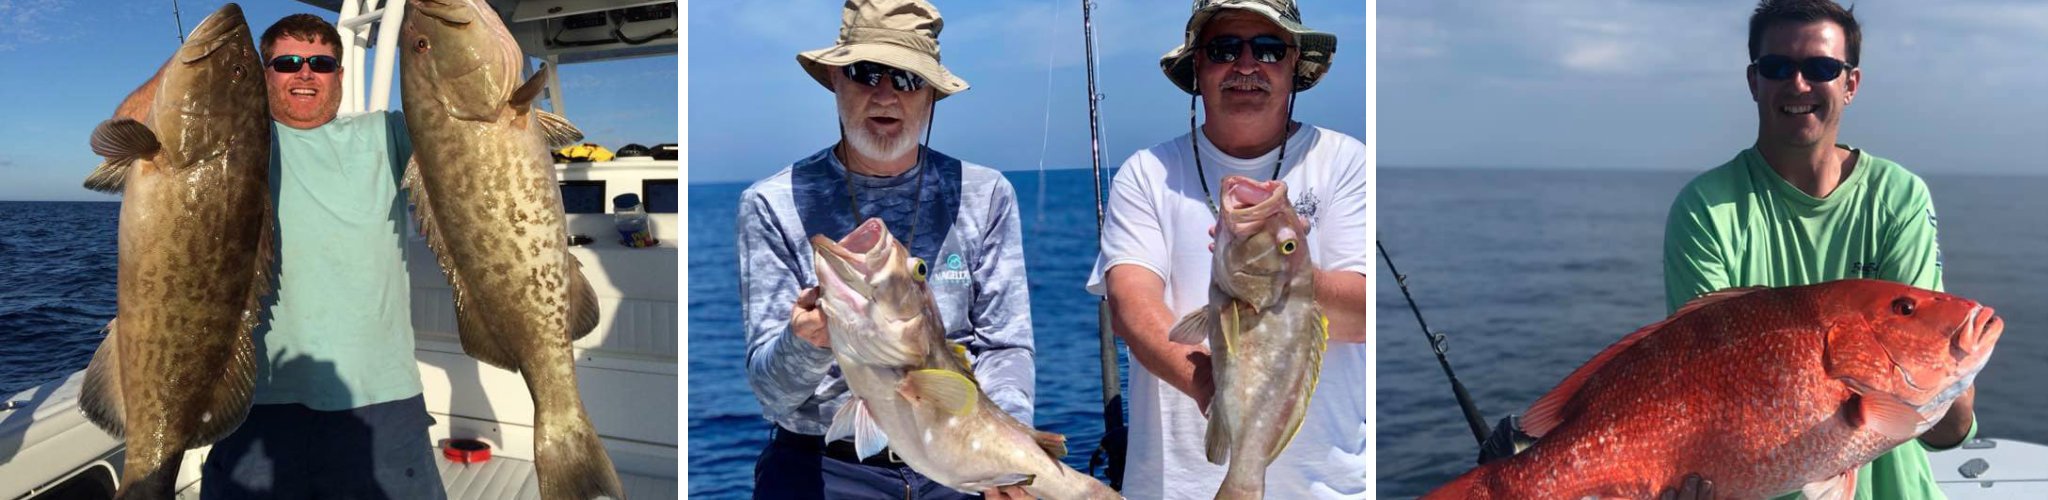 Apalachicola Fishing Company Offshore Fishing Trips